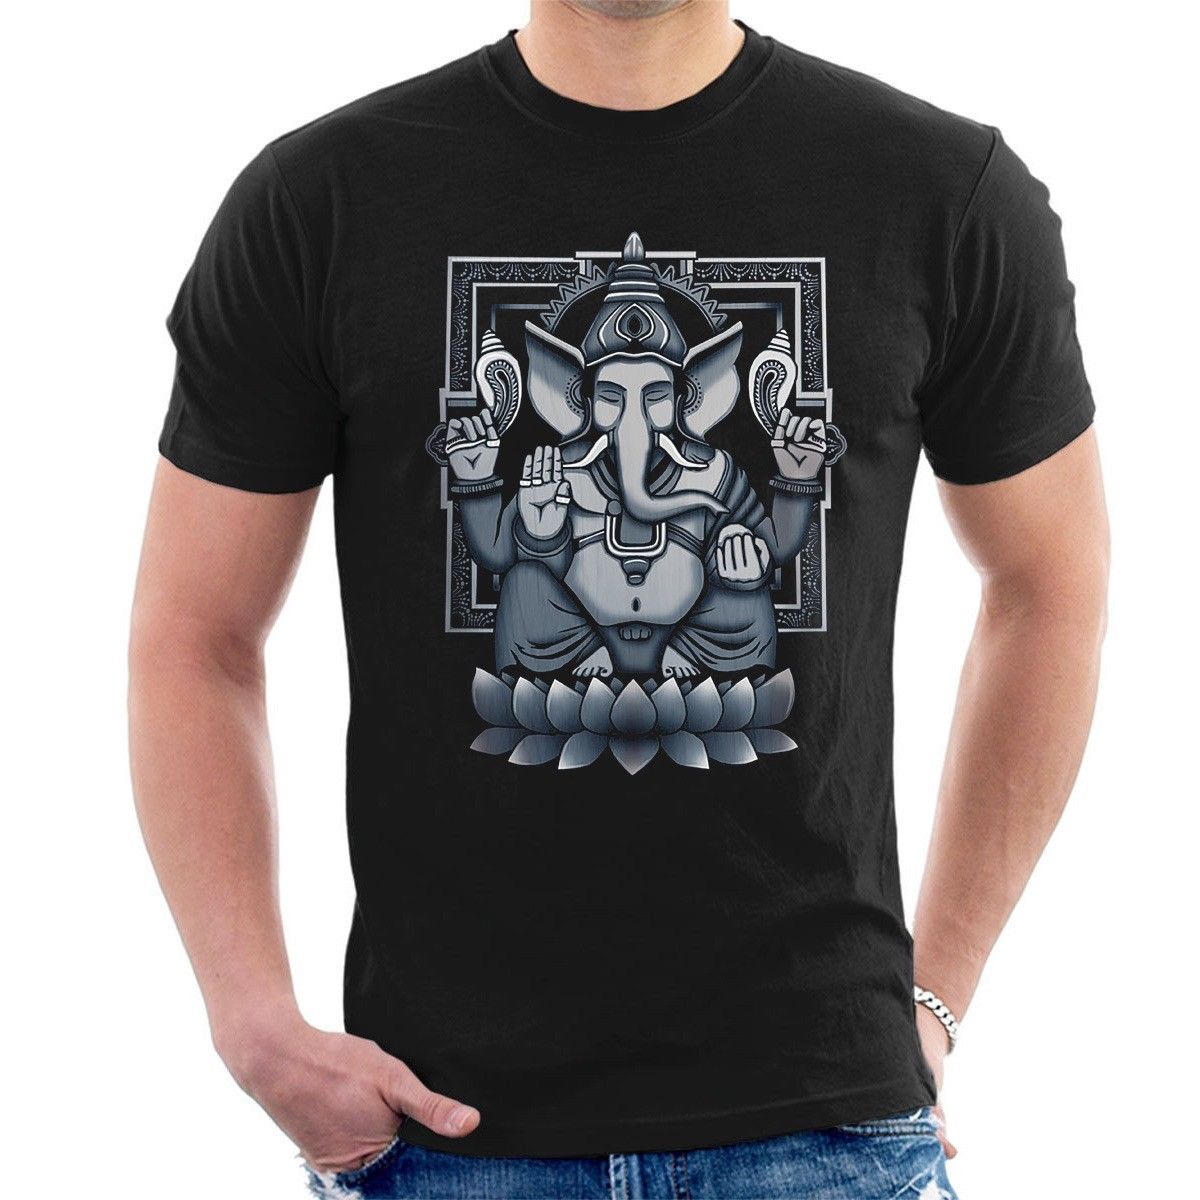 GANESHA T-SHIRT Lotus Indian elephant god  meditation zen Men Tee Shirt Tops Short Sleeve Cotton Fitness T-Shirts - Lord Sri Ganesha